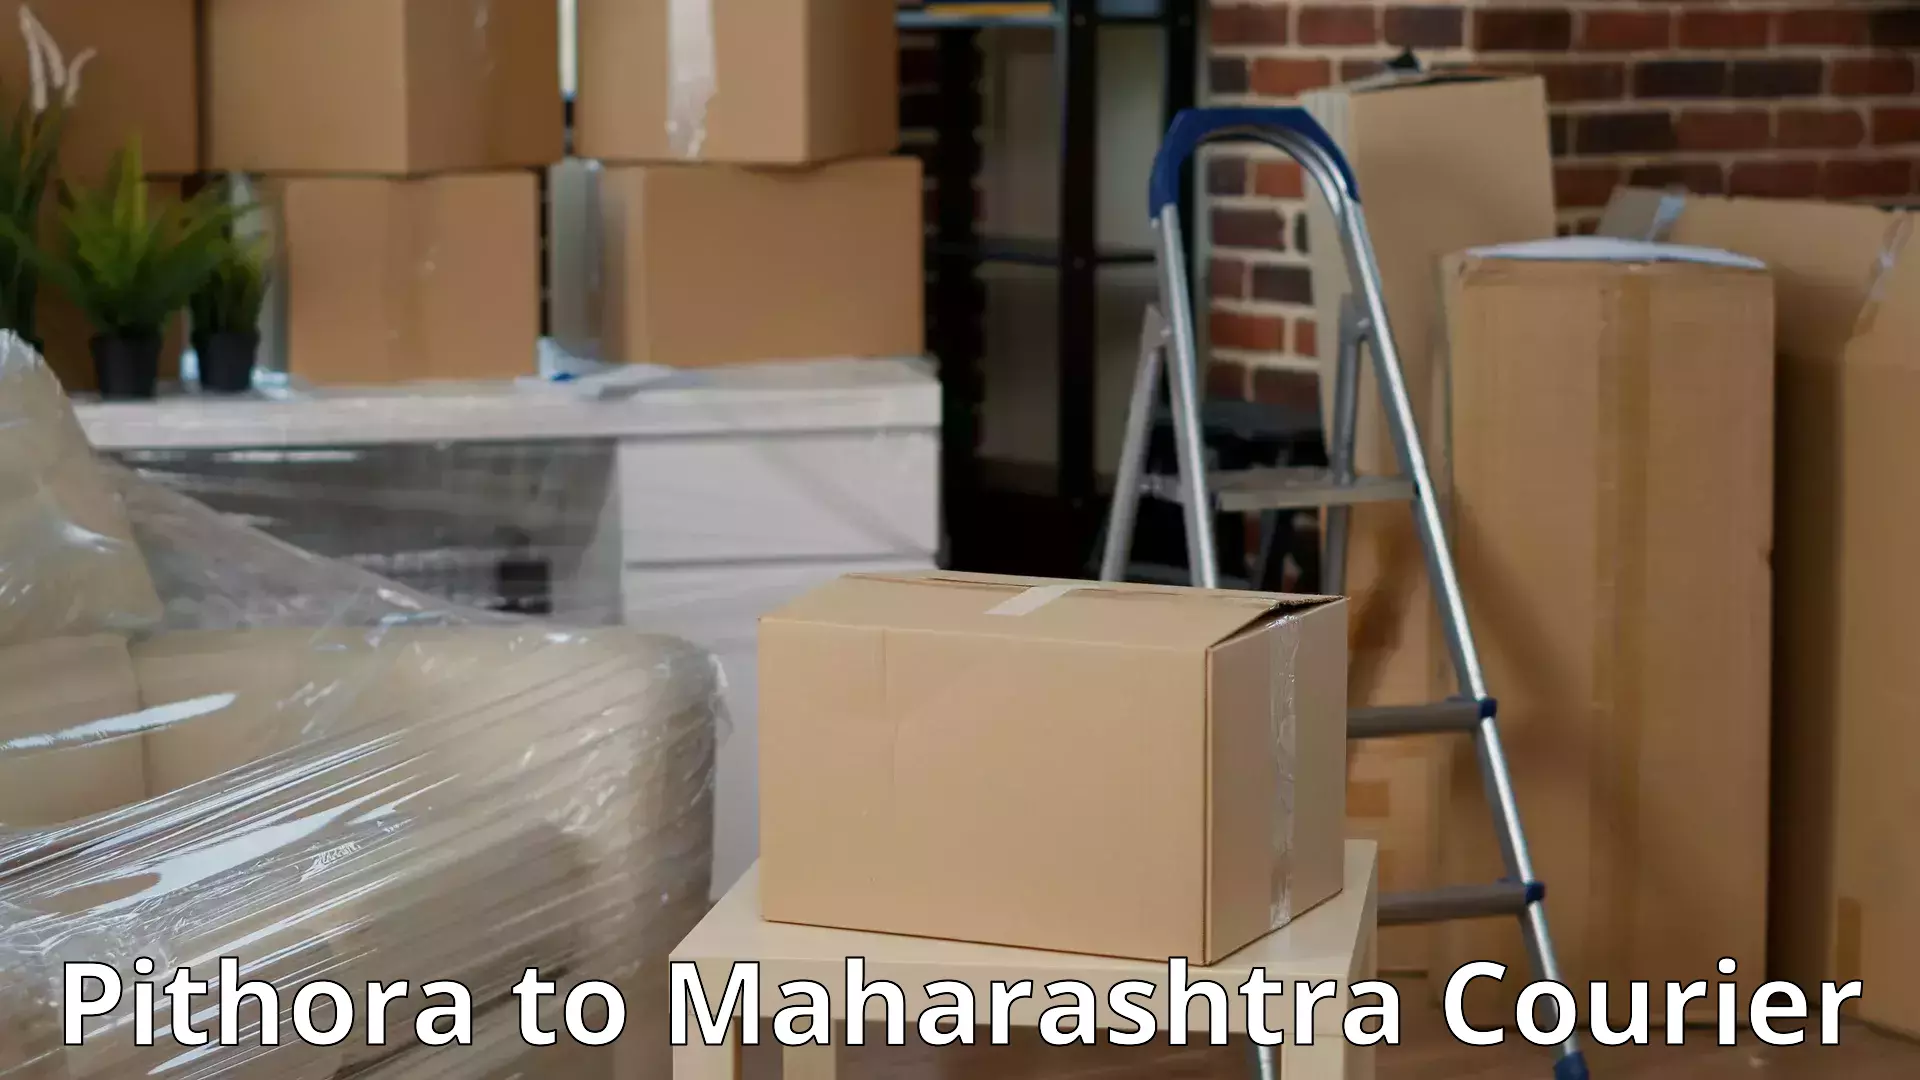 Quality moving and storage Pithora to Rajura